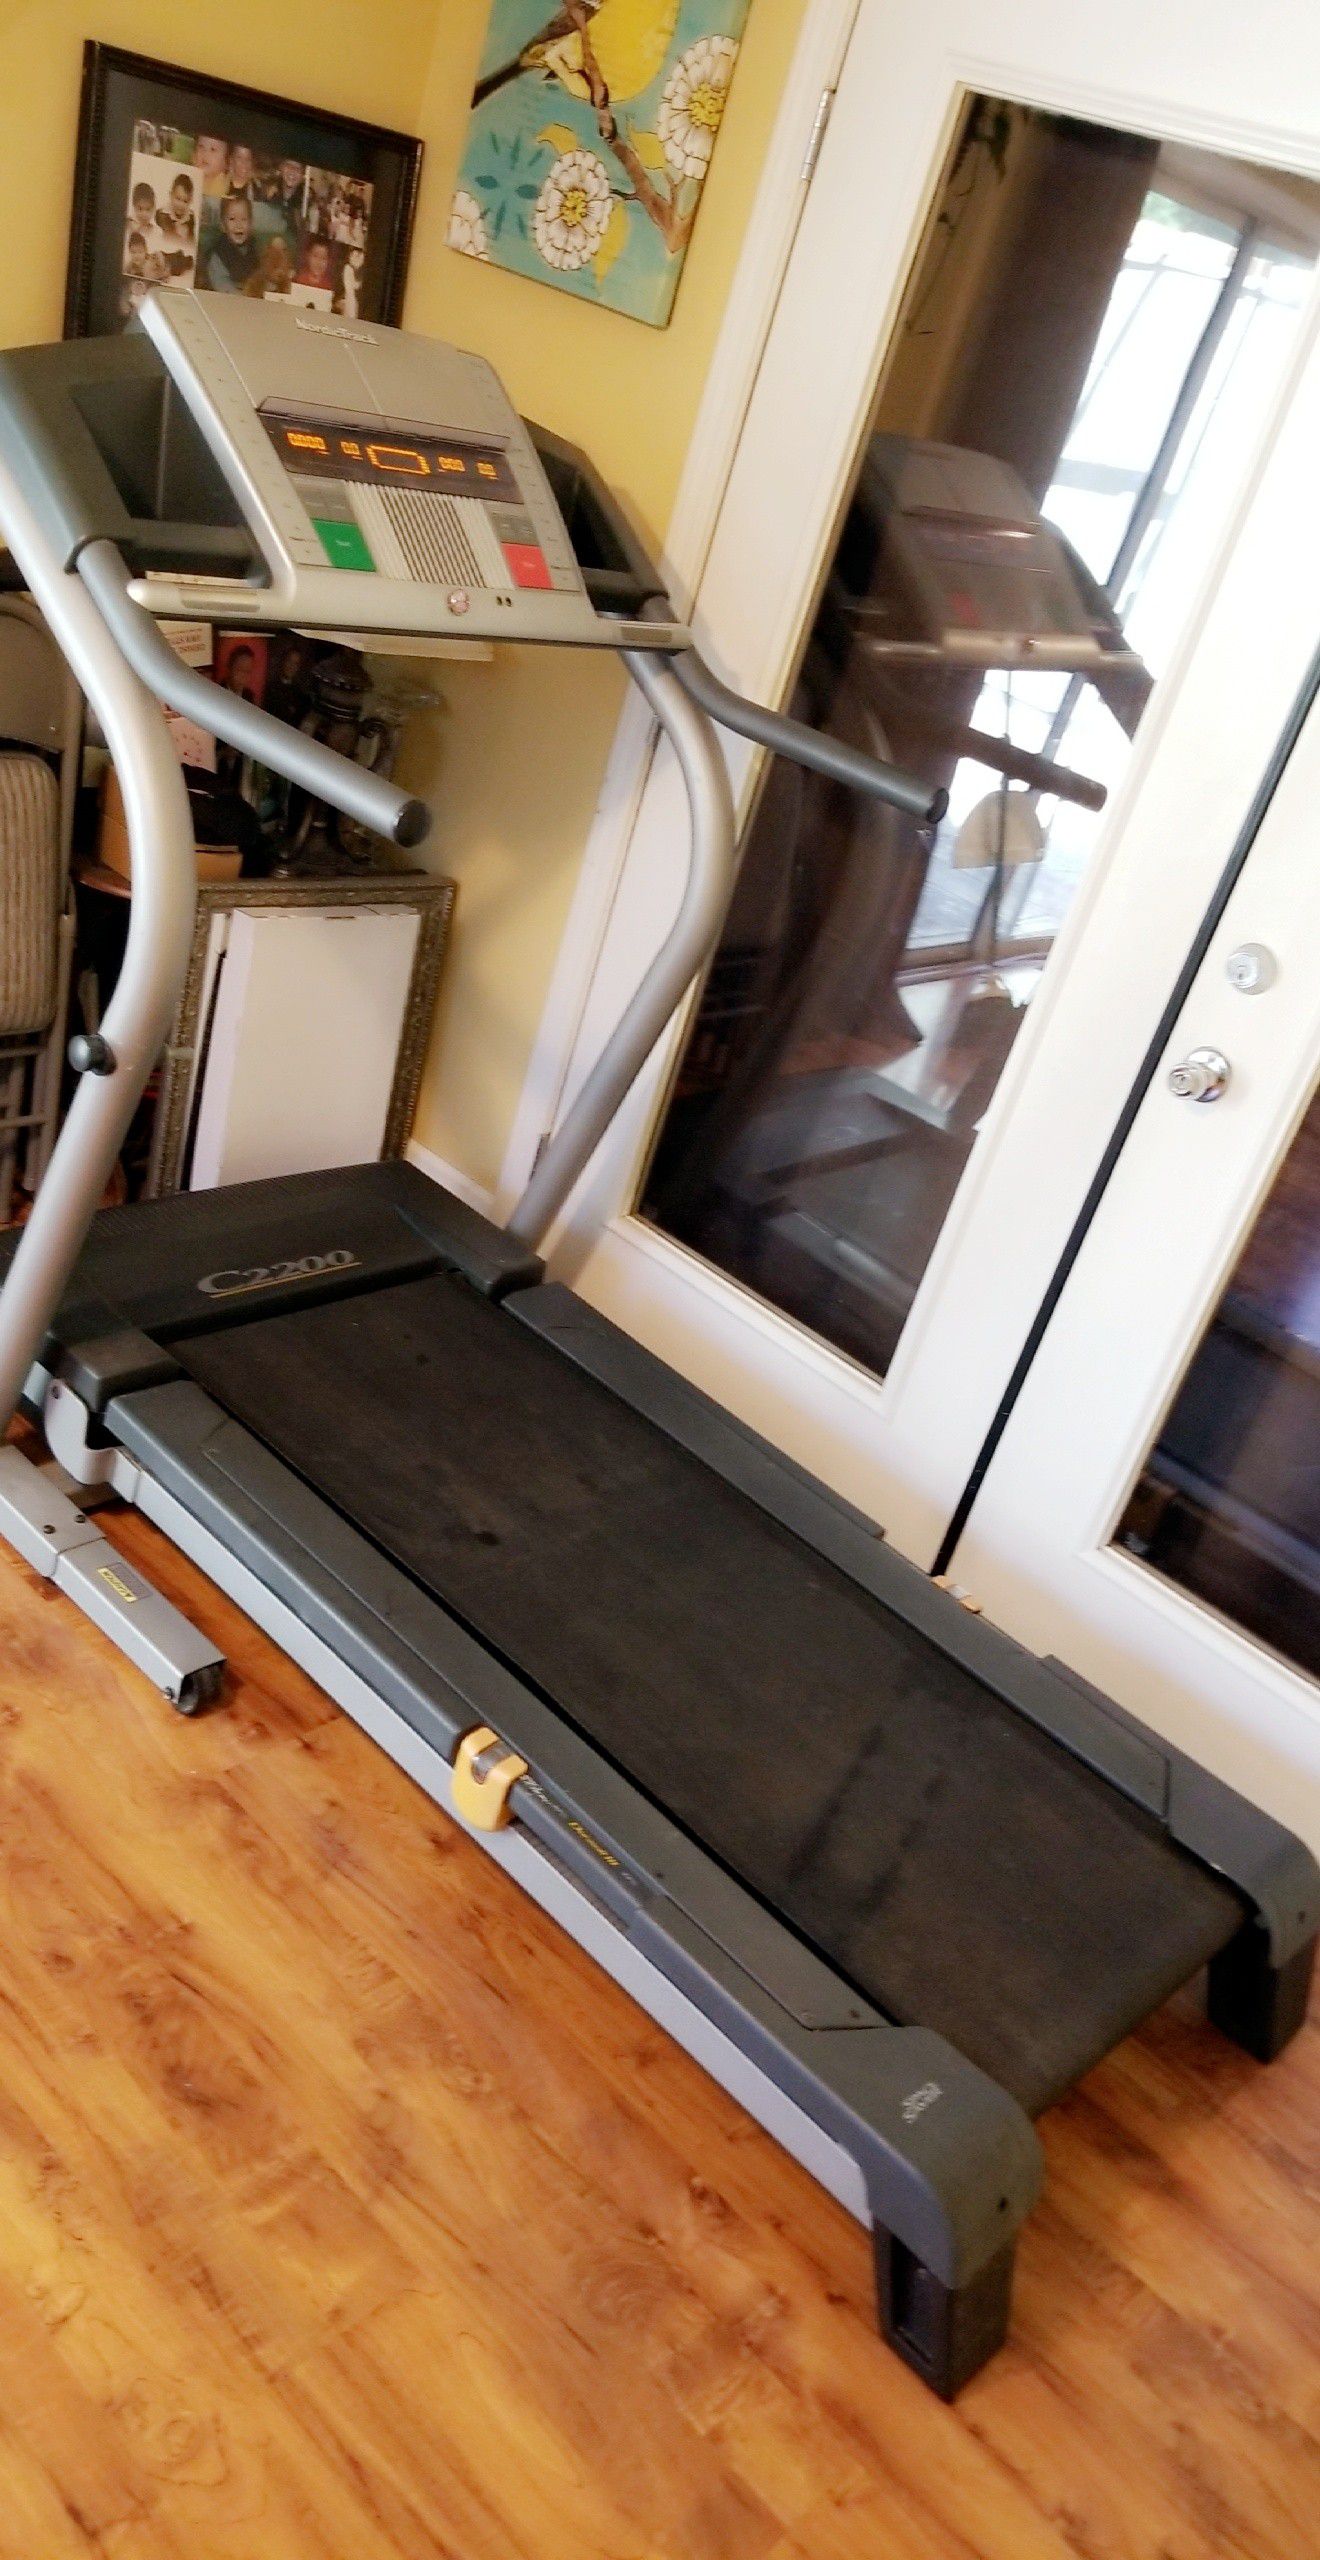 NordicTrack Solaris C2200 Treadmill $300